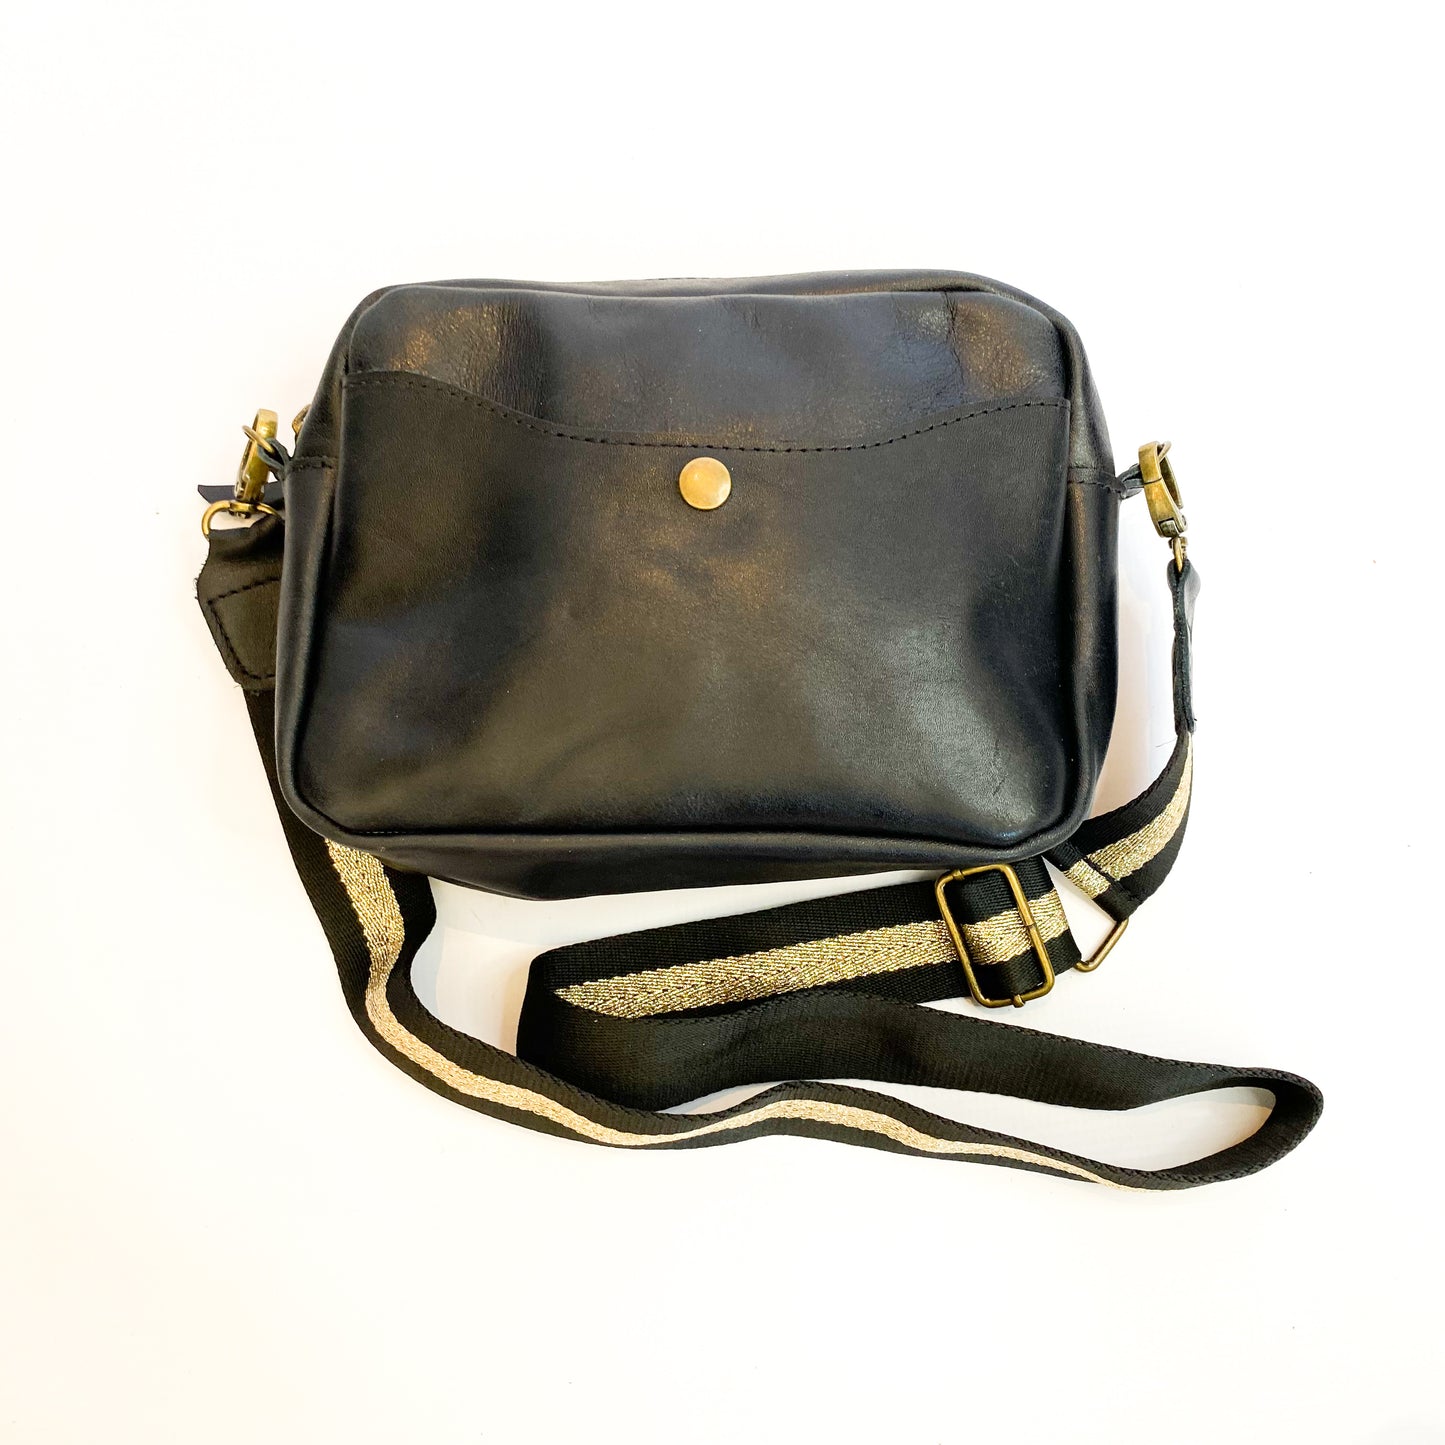 Gia leather black camera crossbody bag